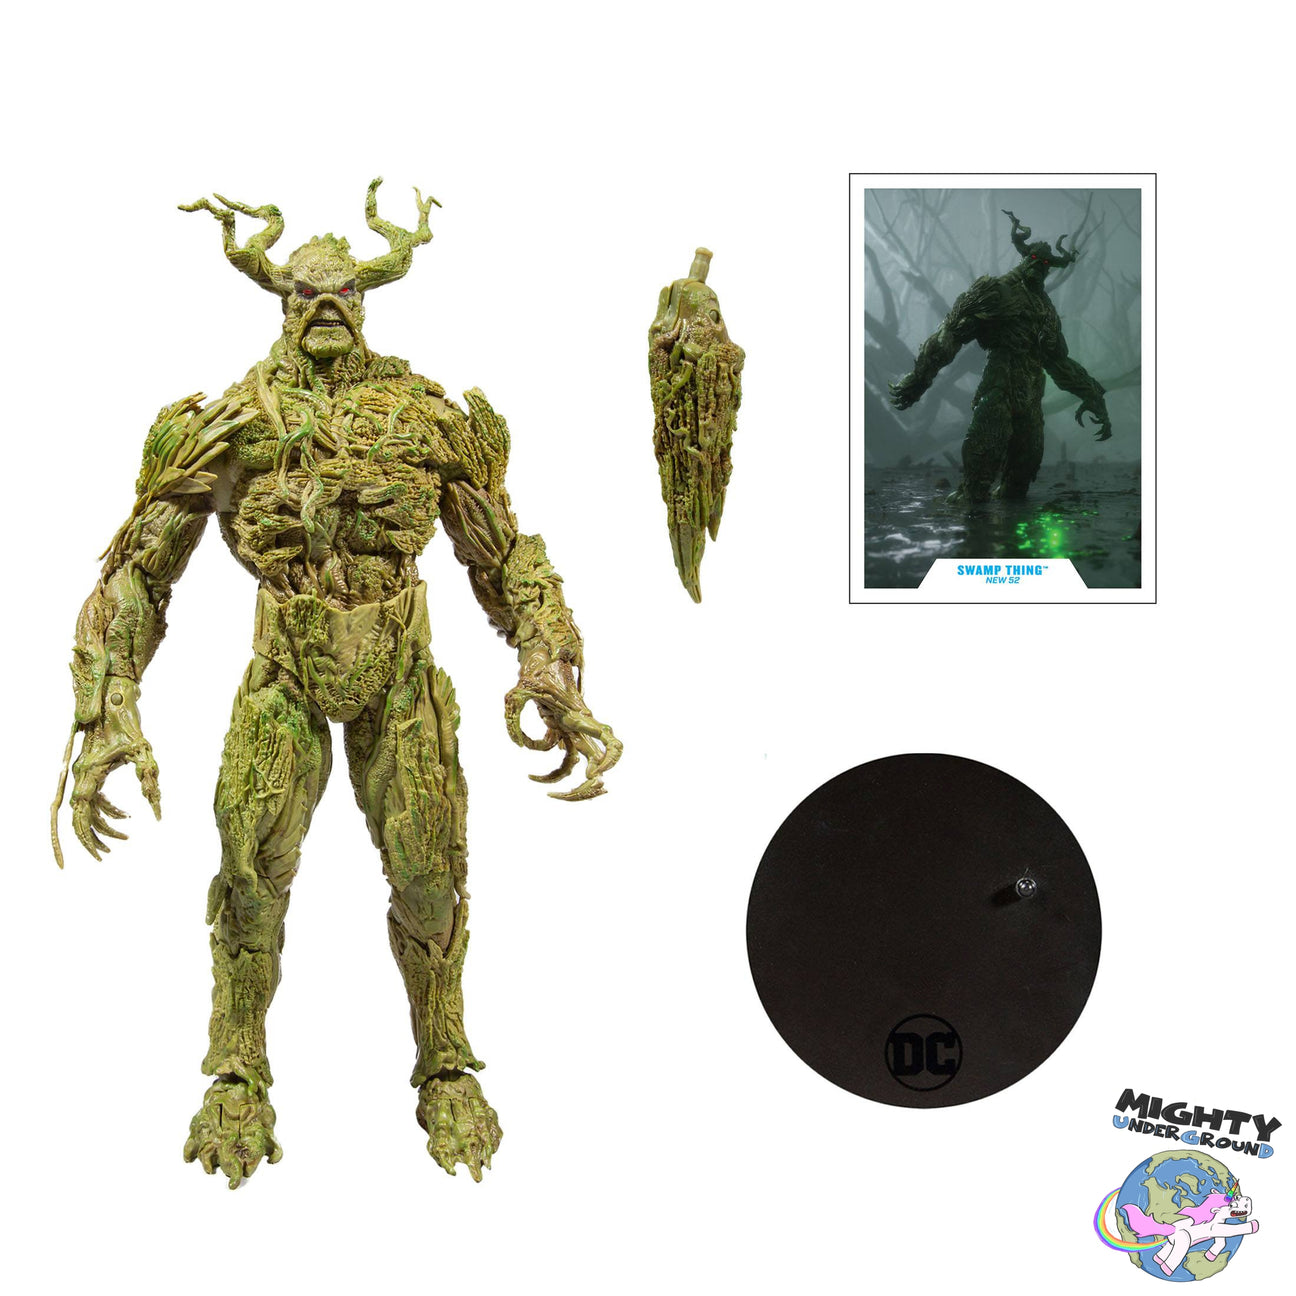 DC Multiverse: Swamp Thing (Variant Edition, 30 cm)-Actionfiguren-McFarlane Toys-Mighty Underground